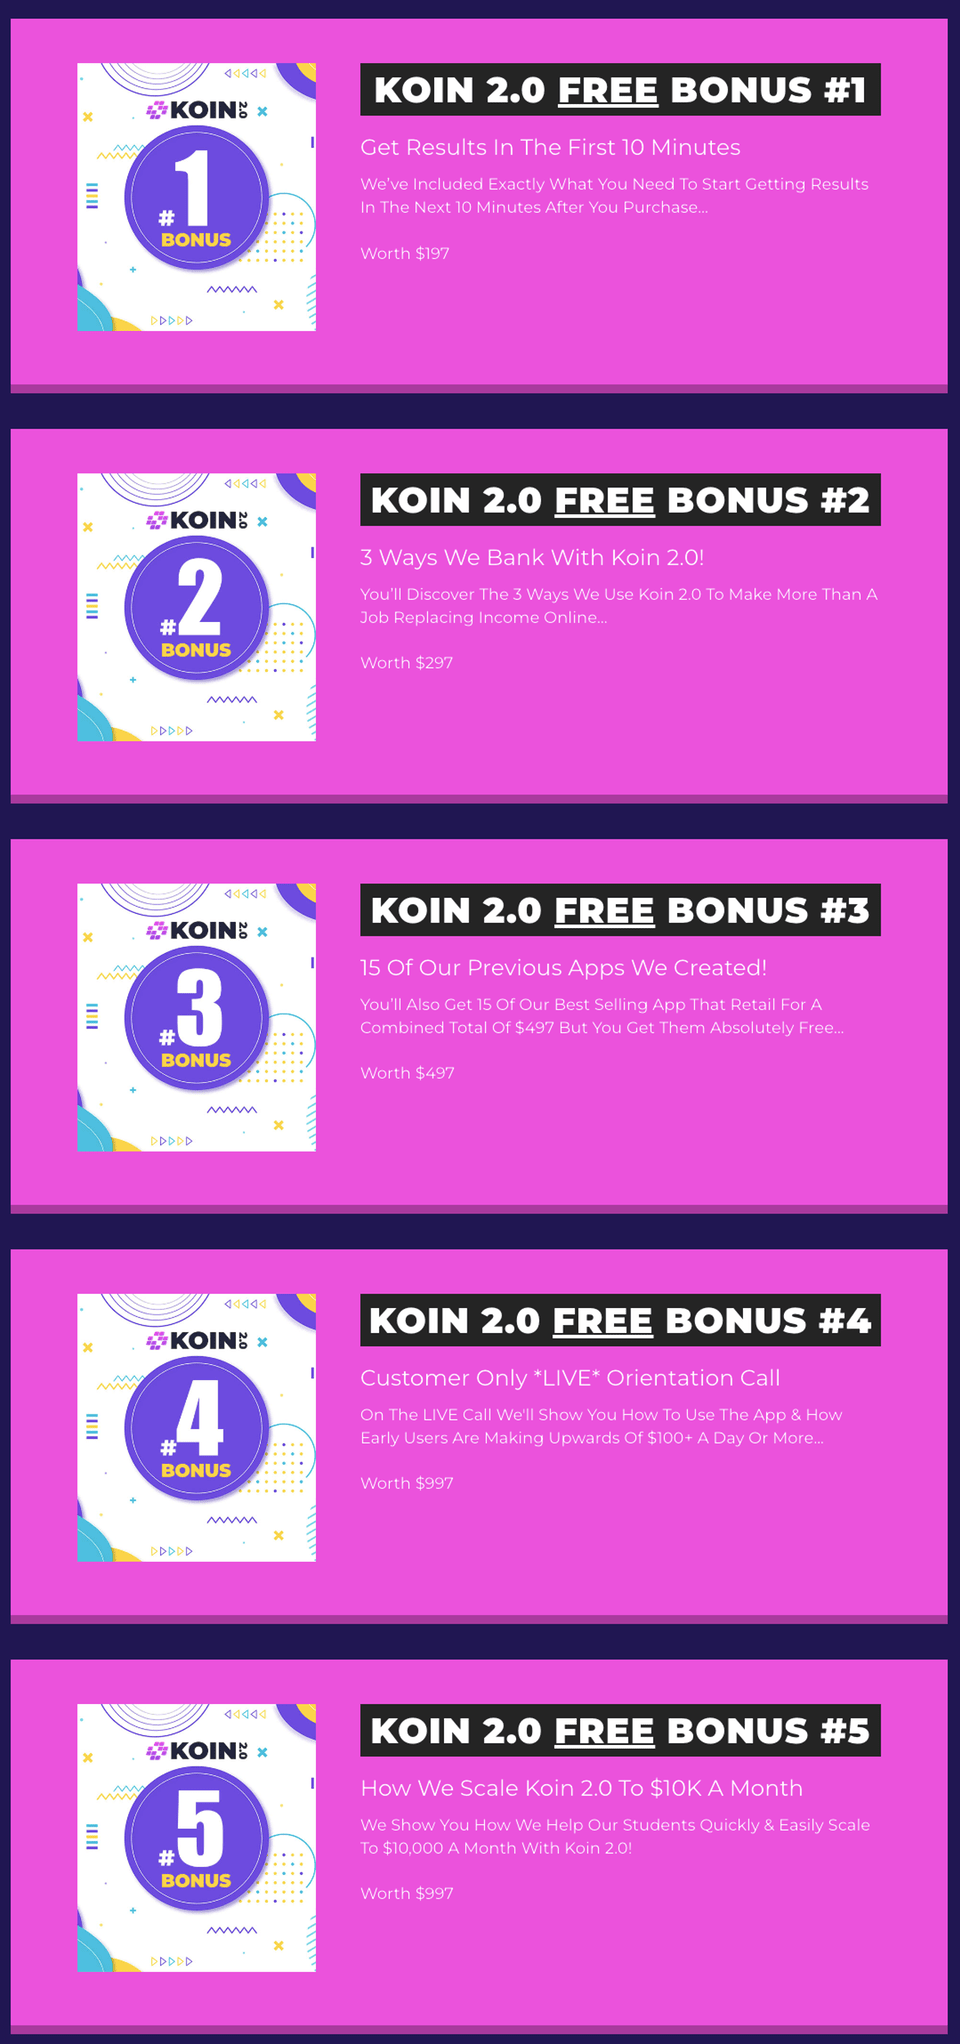 Koin-2.0-Bonus-1